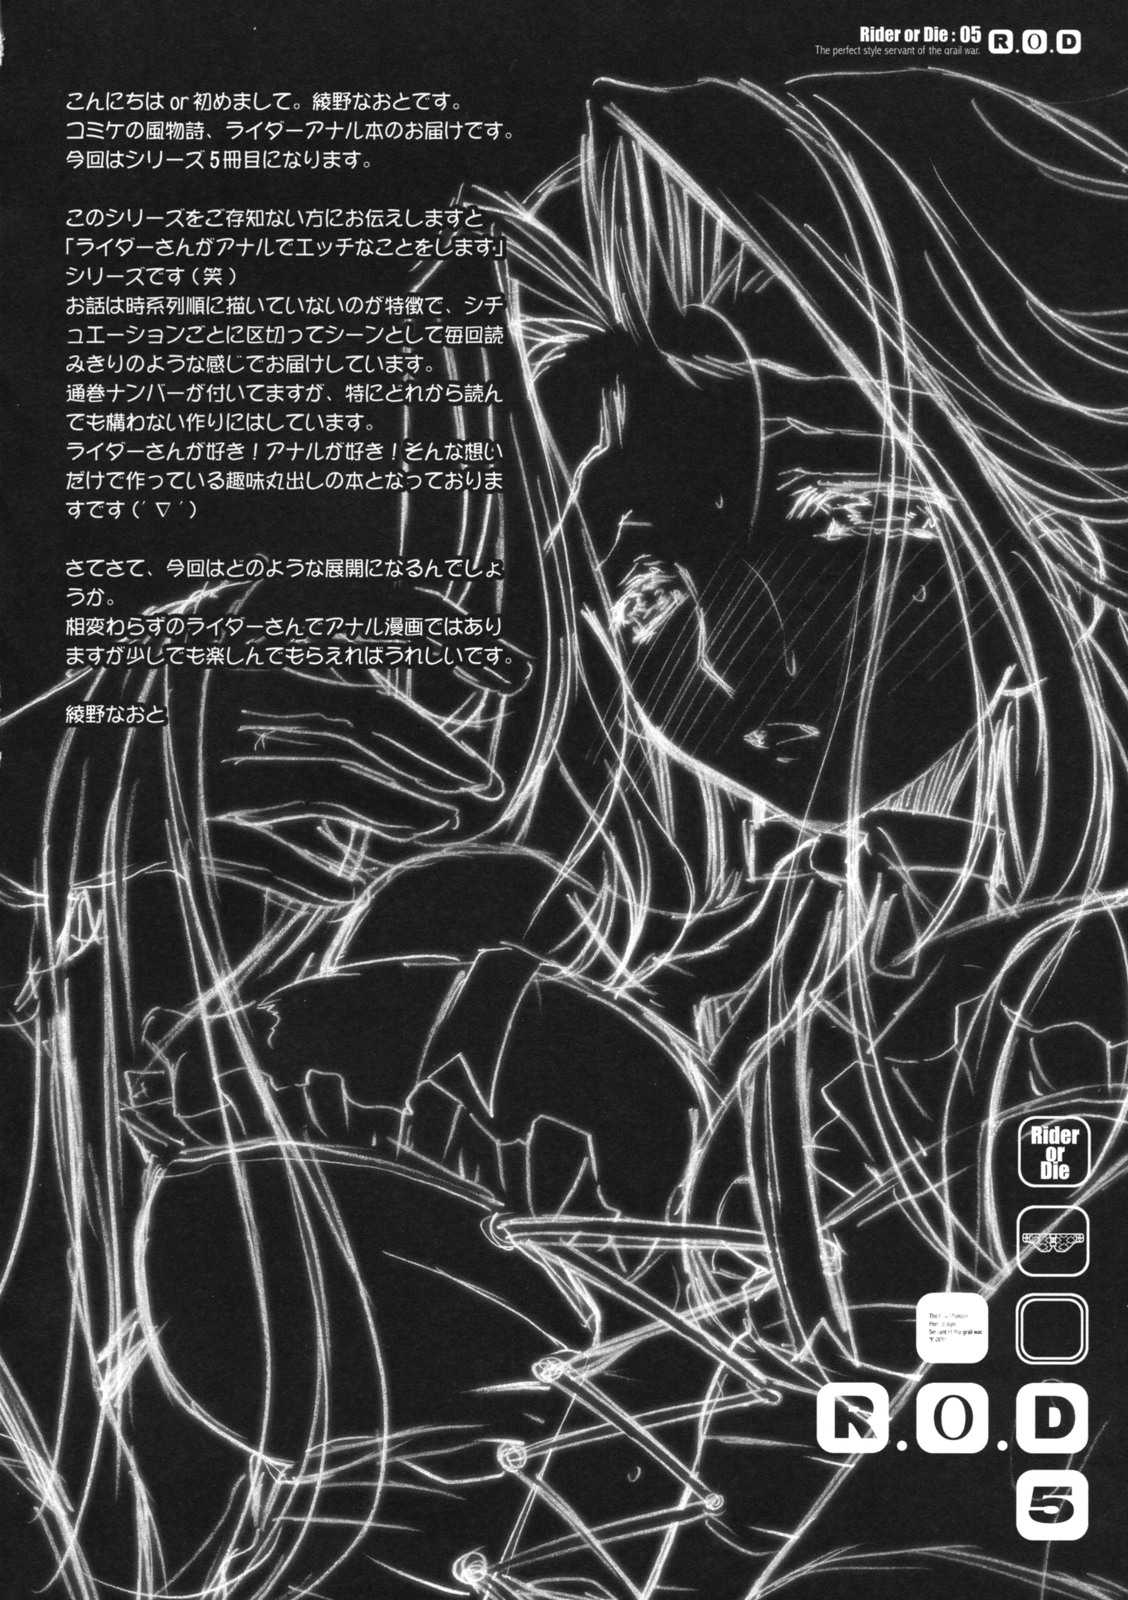 [Kaiki Nisshoku] R.O.D 05 -Rider or Die- (Fate Hollow Ataraxia) [English] 